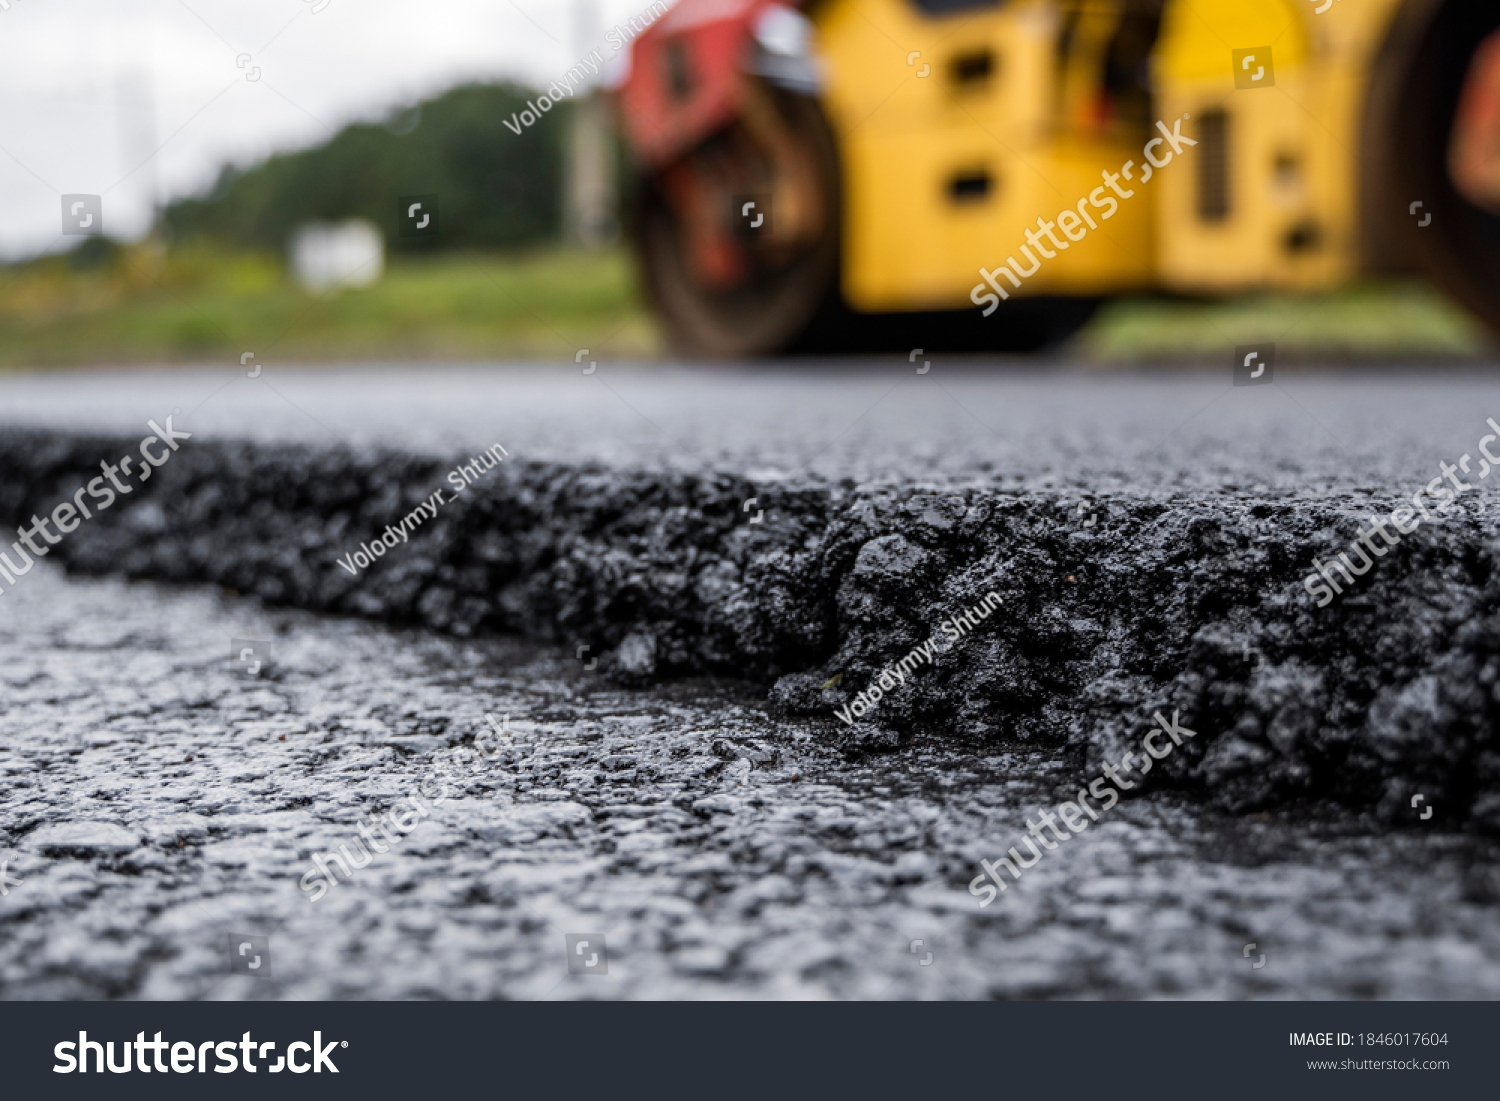 Asphalt road roller with heavy vibration roller compactor press new hot asphalt on the roadway on a road construction site. Heavy Vibration roller at asphalt pavement working. Repairing. #1846017604